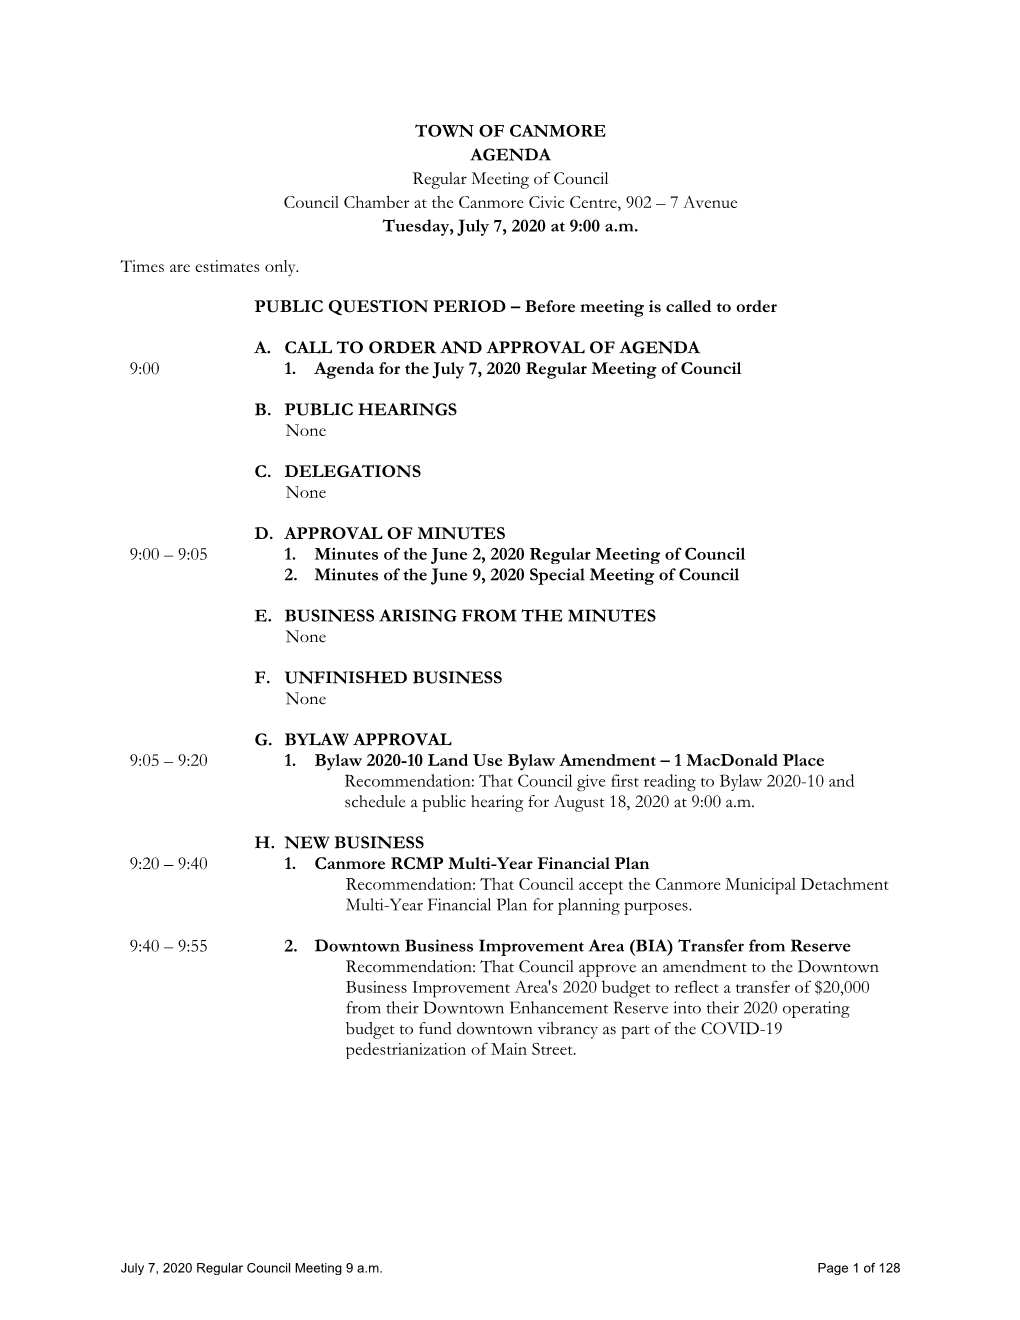 Council Agenda 2020-07-07